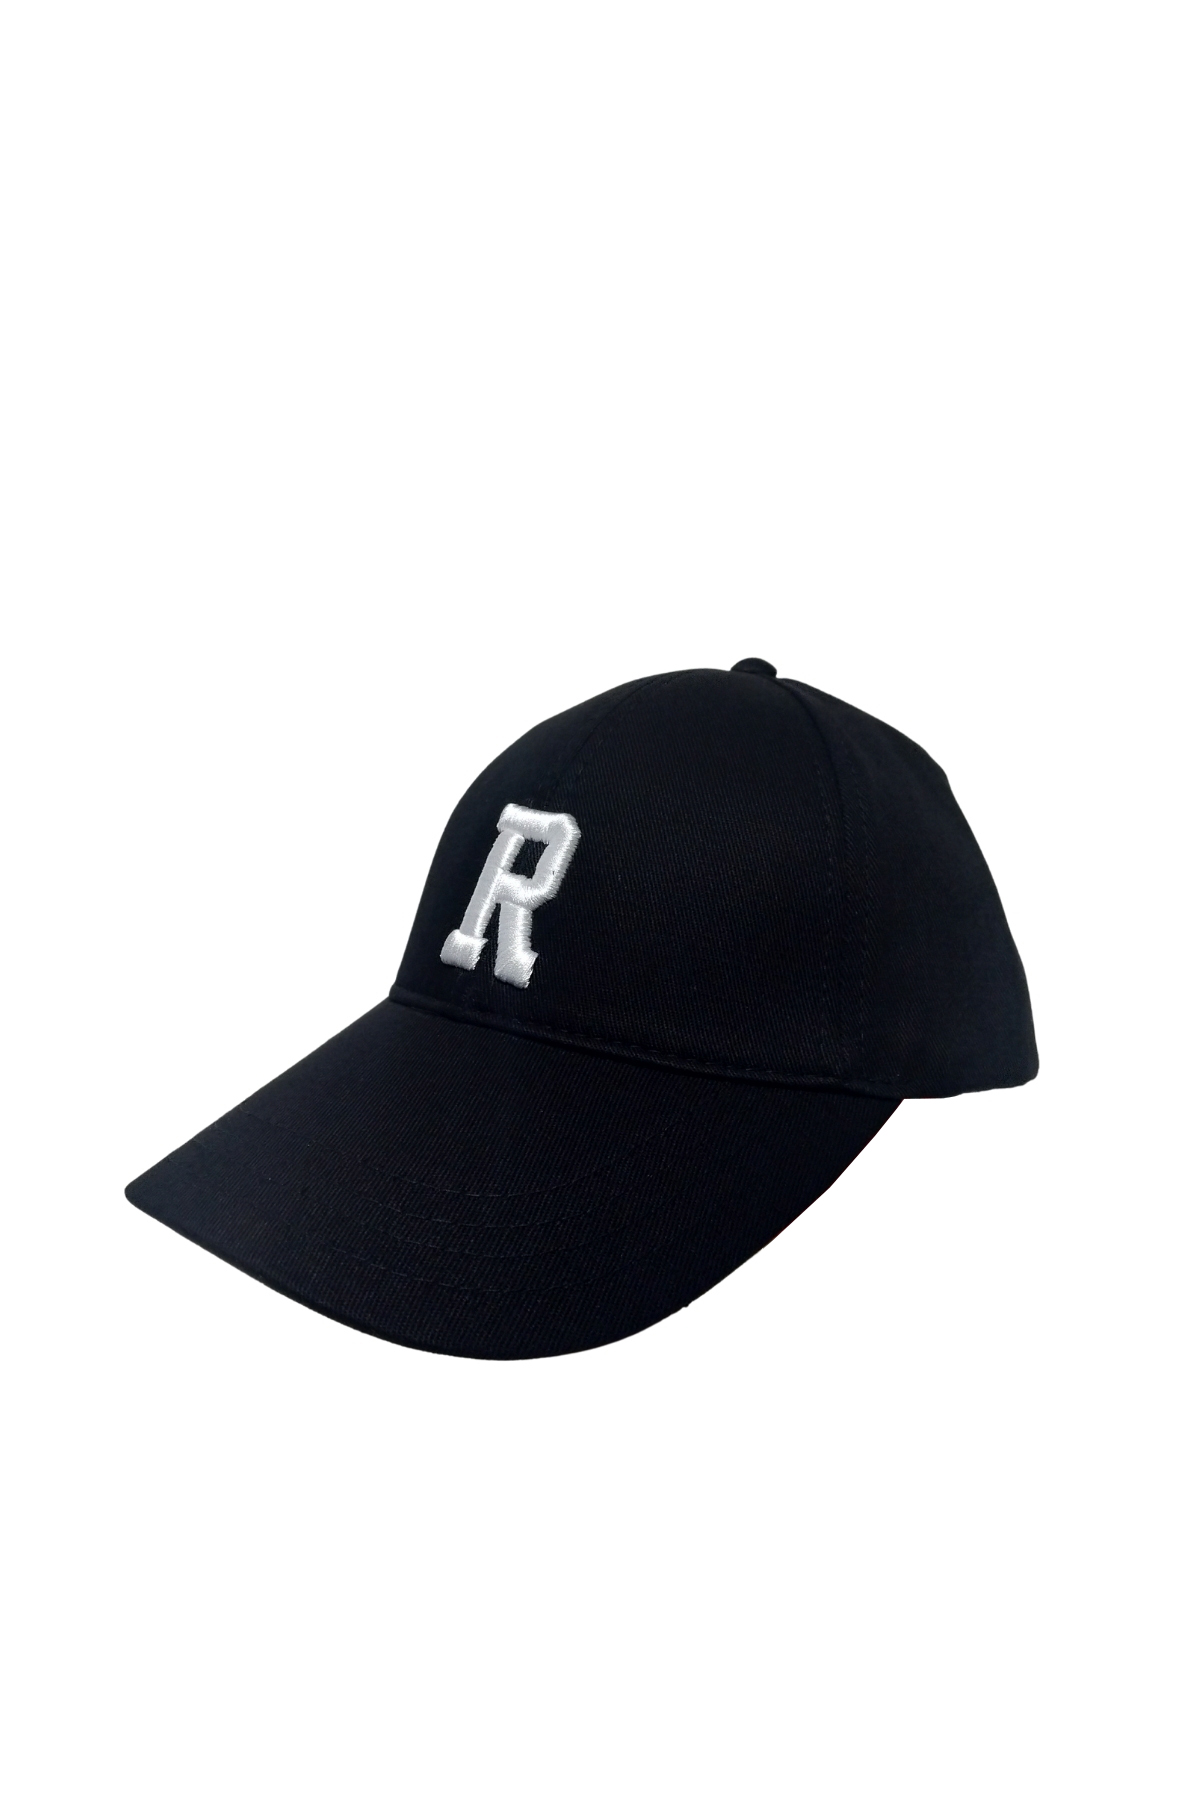 Syt R Harfli Siyah Şapka